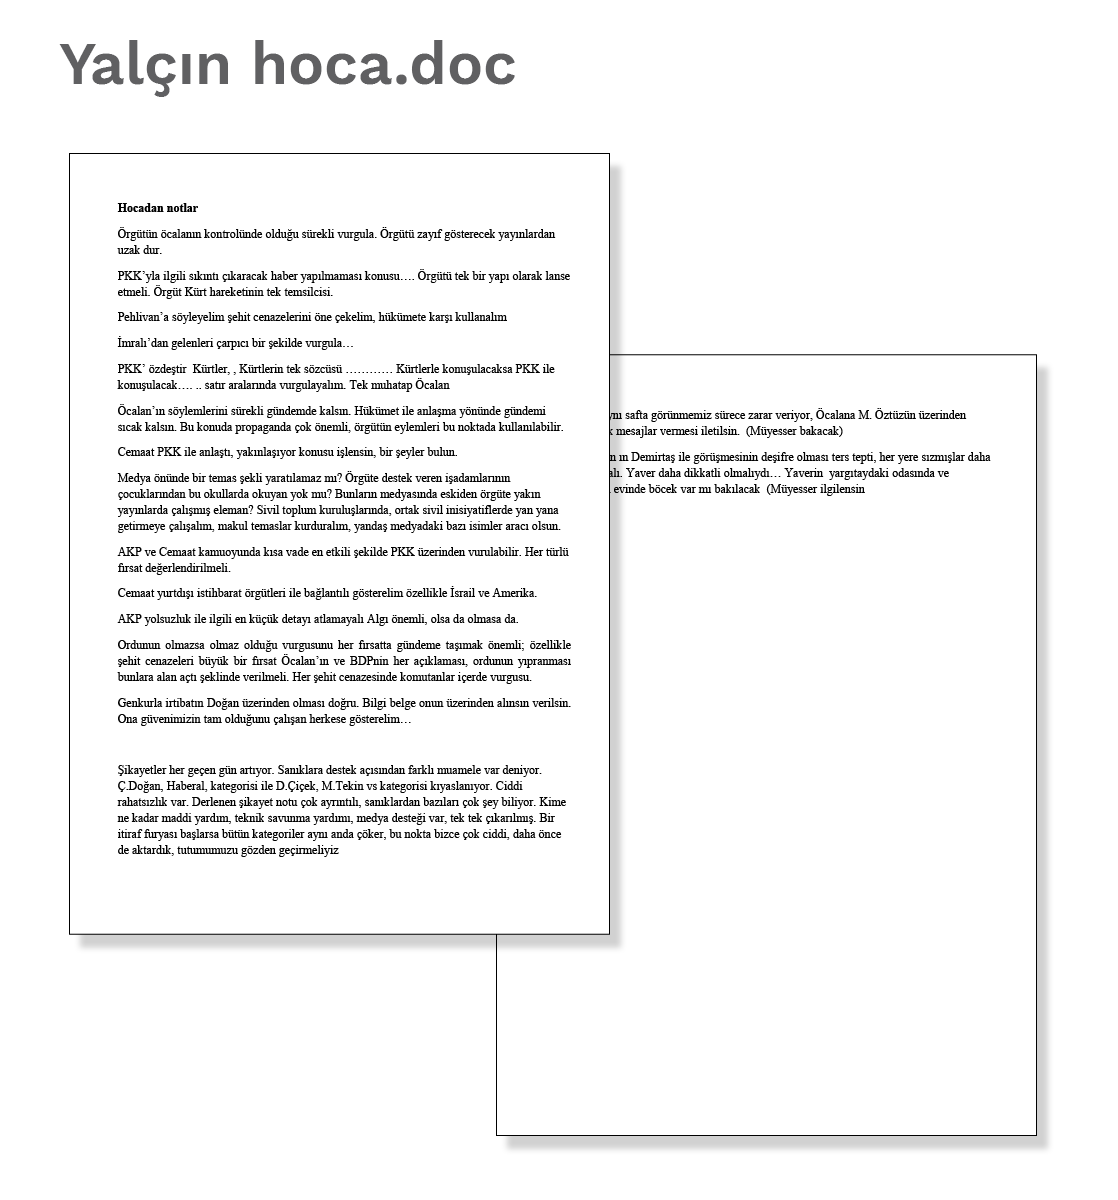 Document 11: Yalçın hoca.doc